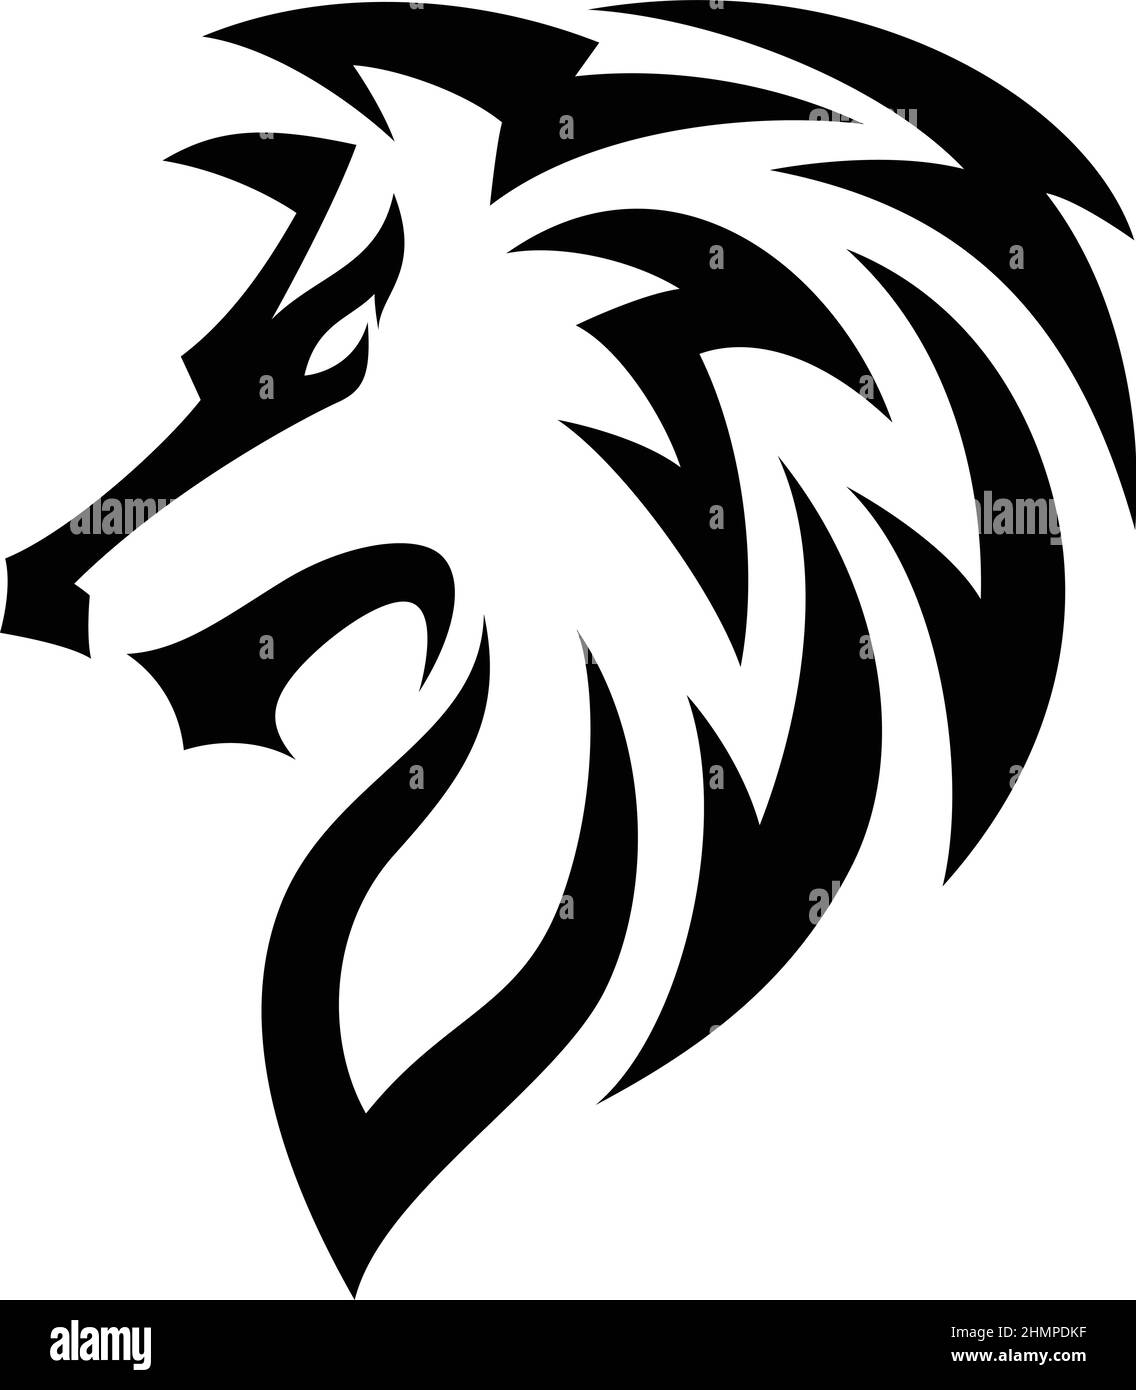 simple-design-of-wolf-head-tribal-tattoo-vector-2HMPDKF.jpg